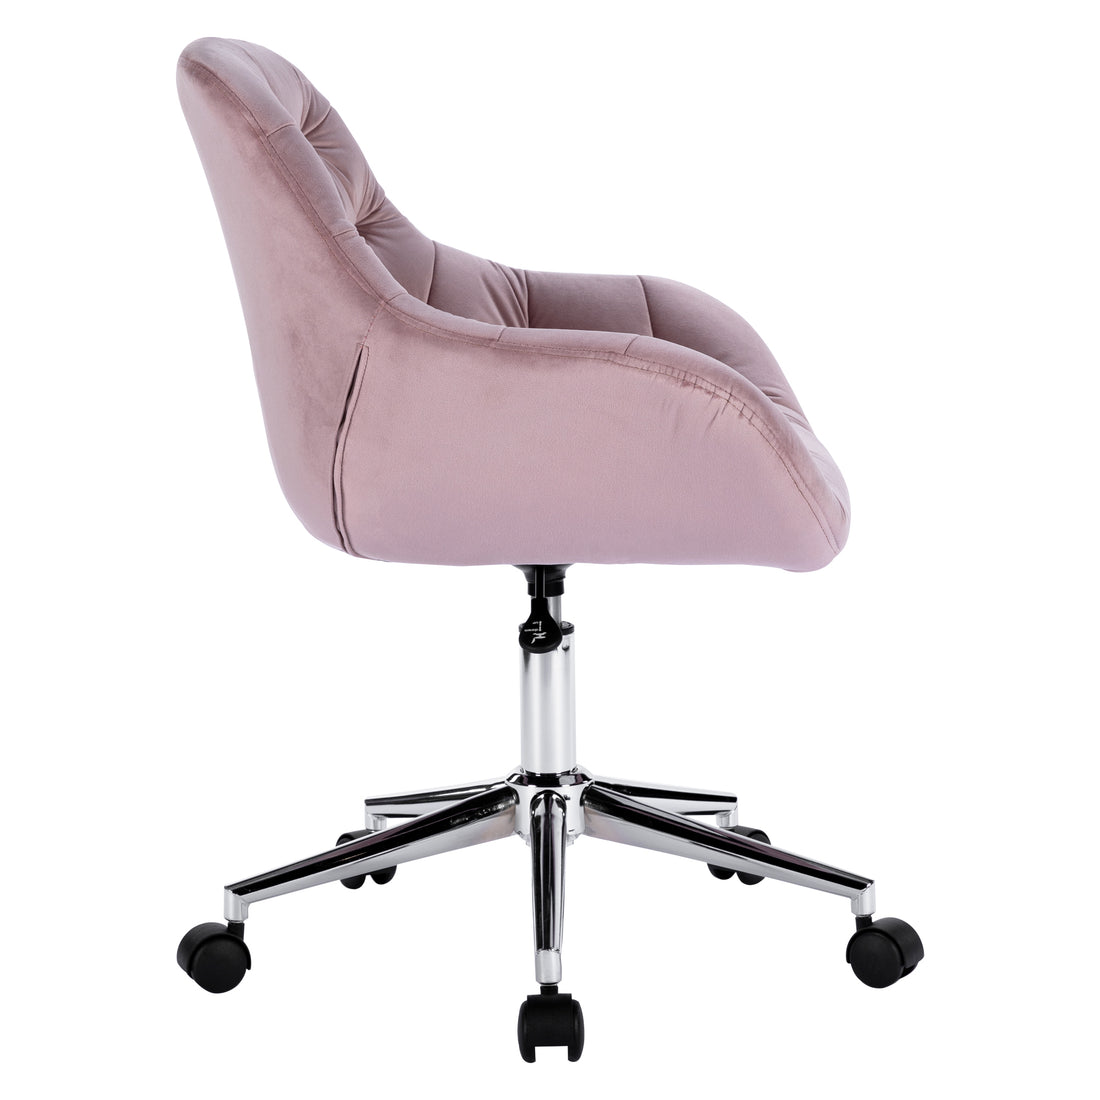 Ava Tufted Vanity Chair